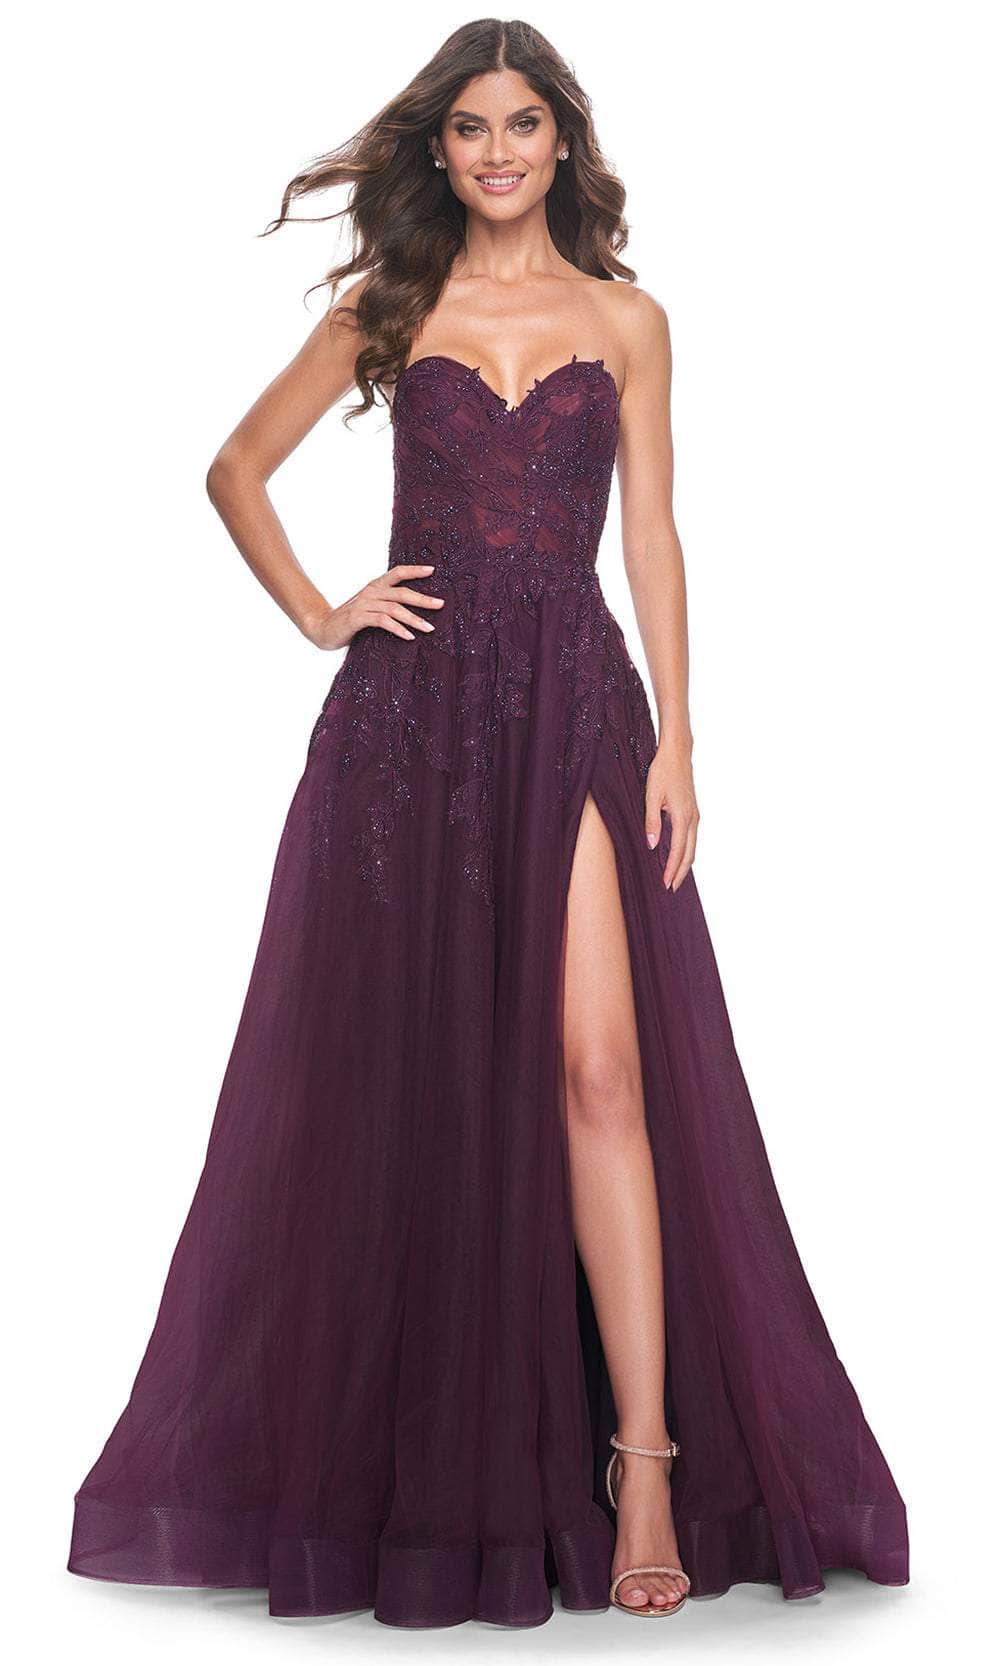 La Femme 32304 - Appliqued Strapless Prom Gown Prom Dresses 00 / Dark Berry